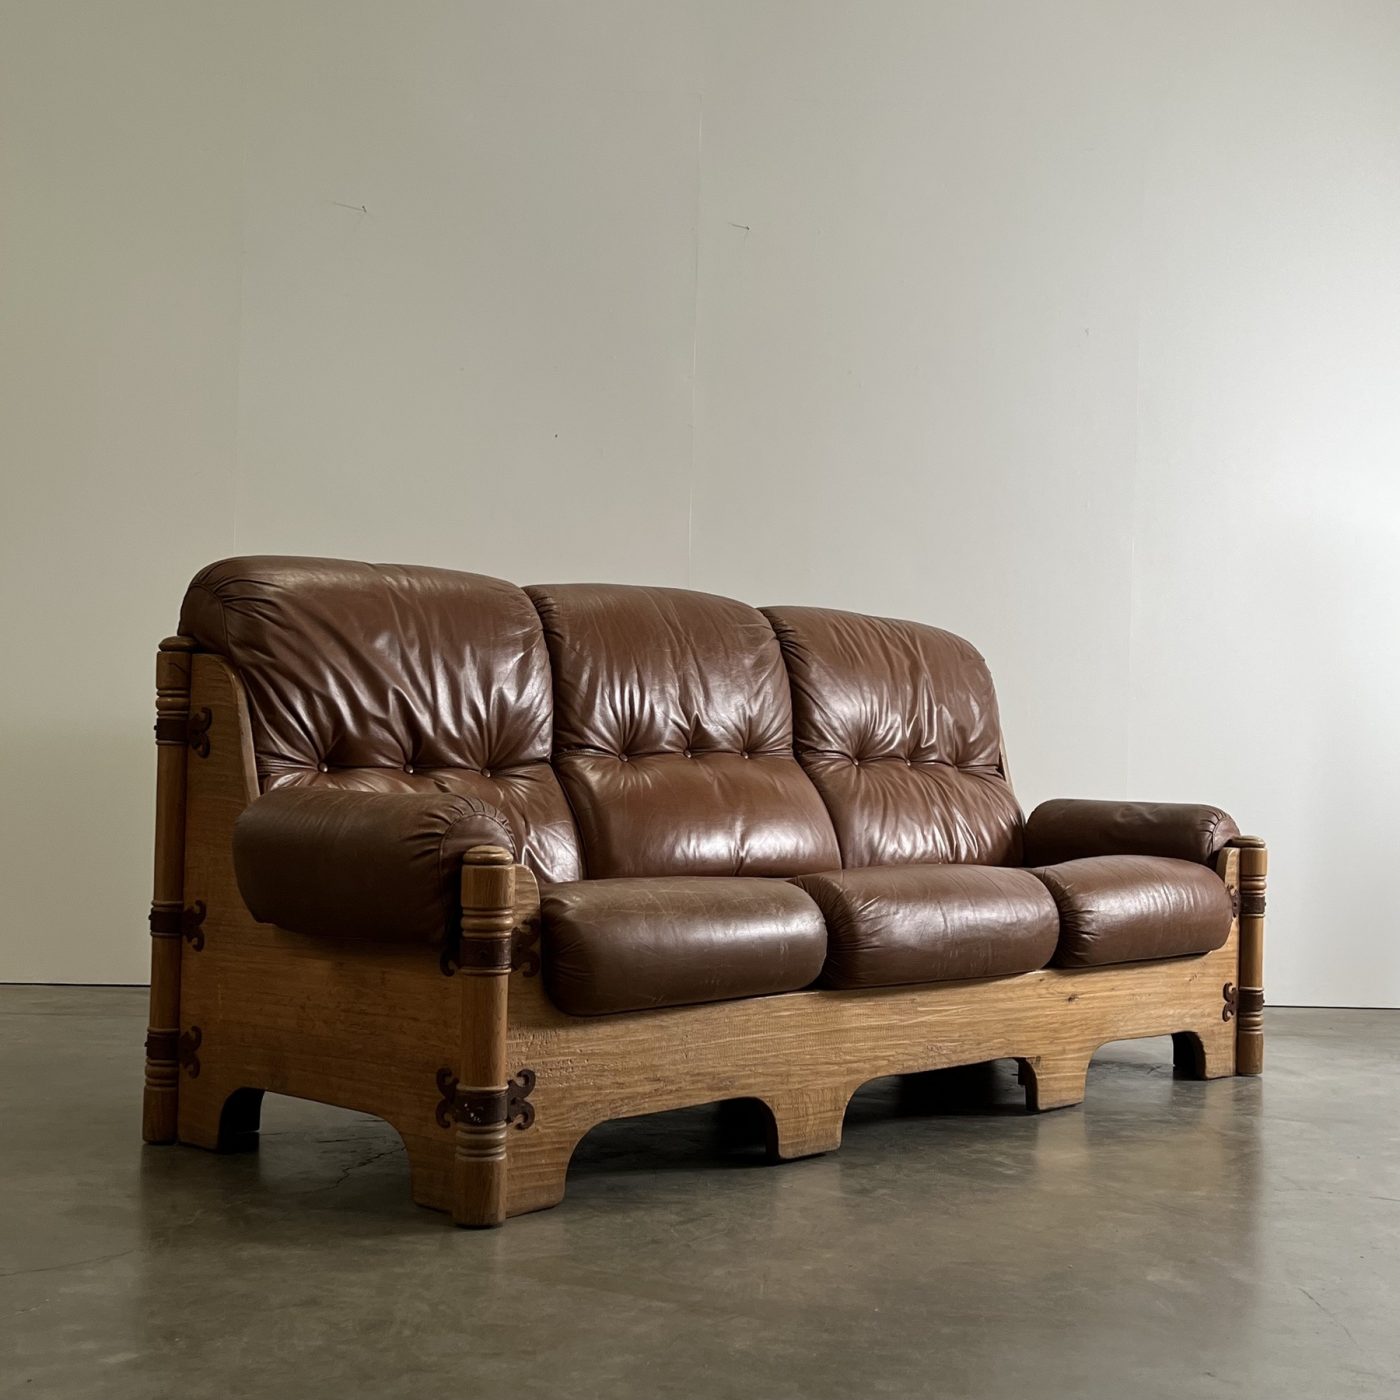 objet-vagabond-leather-set0011